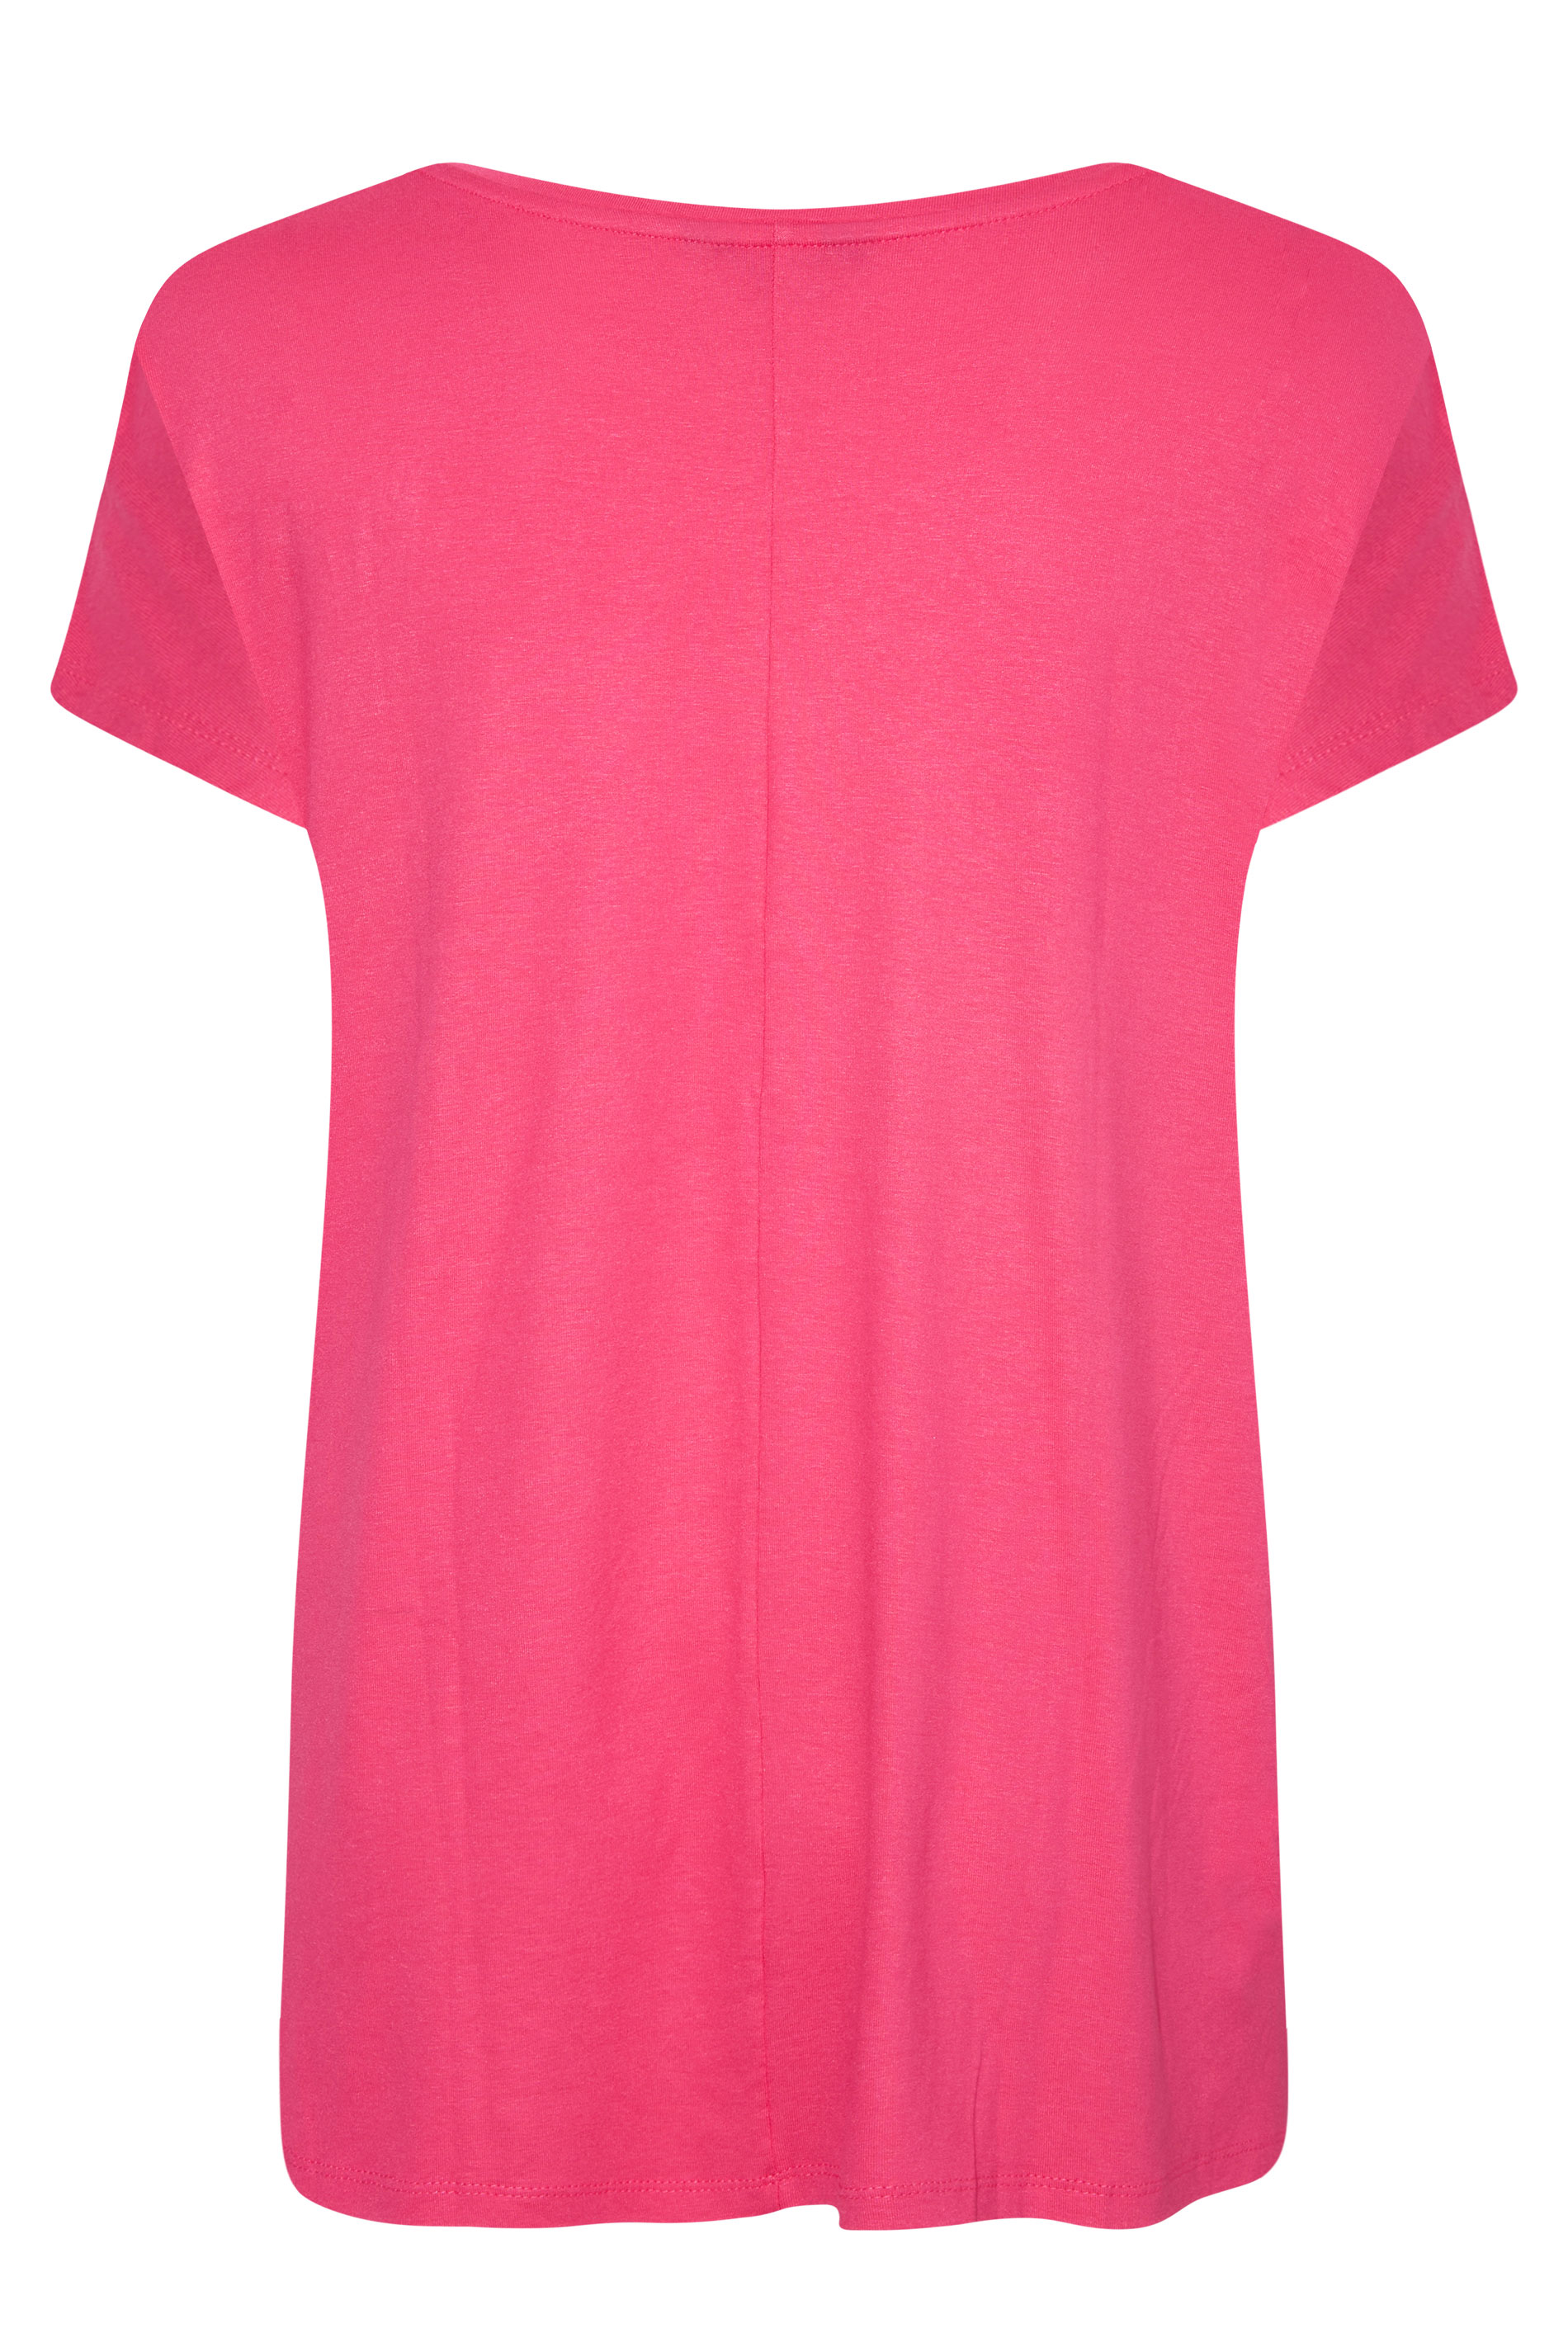 Grande taille  Tops Grande taille  Tops Jersey | T-Shirt Rose Coeurs Léopard en Jersey - LS46576